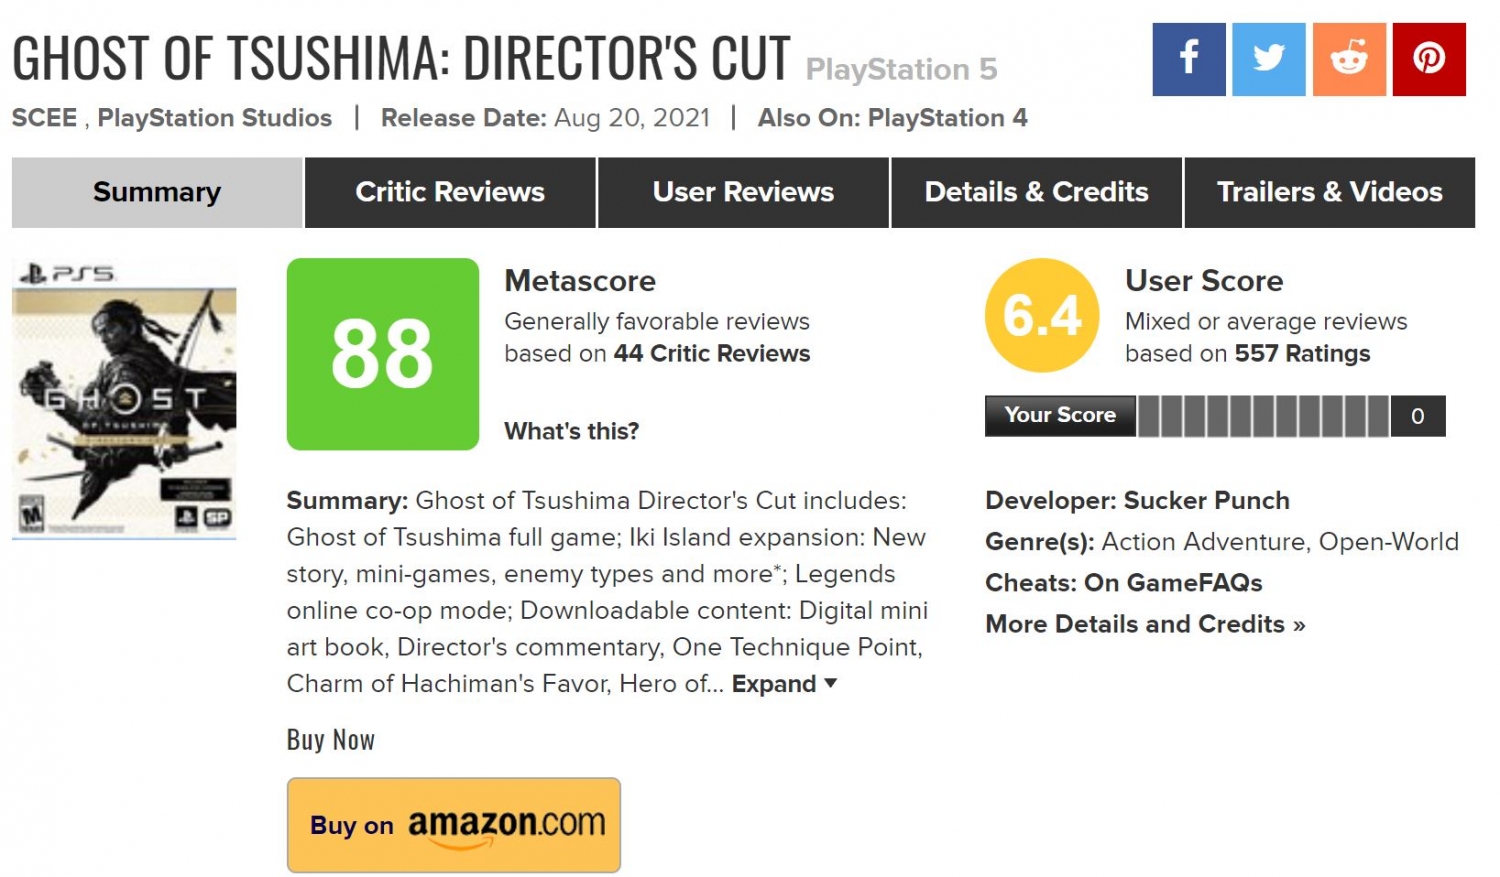 Ghost of Tsushima Director's Cut - PlayStation 5